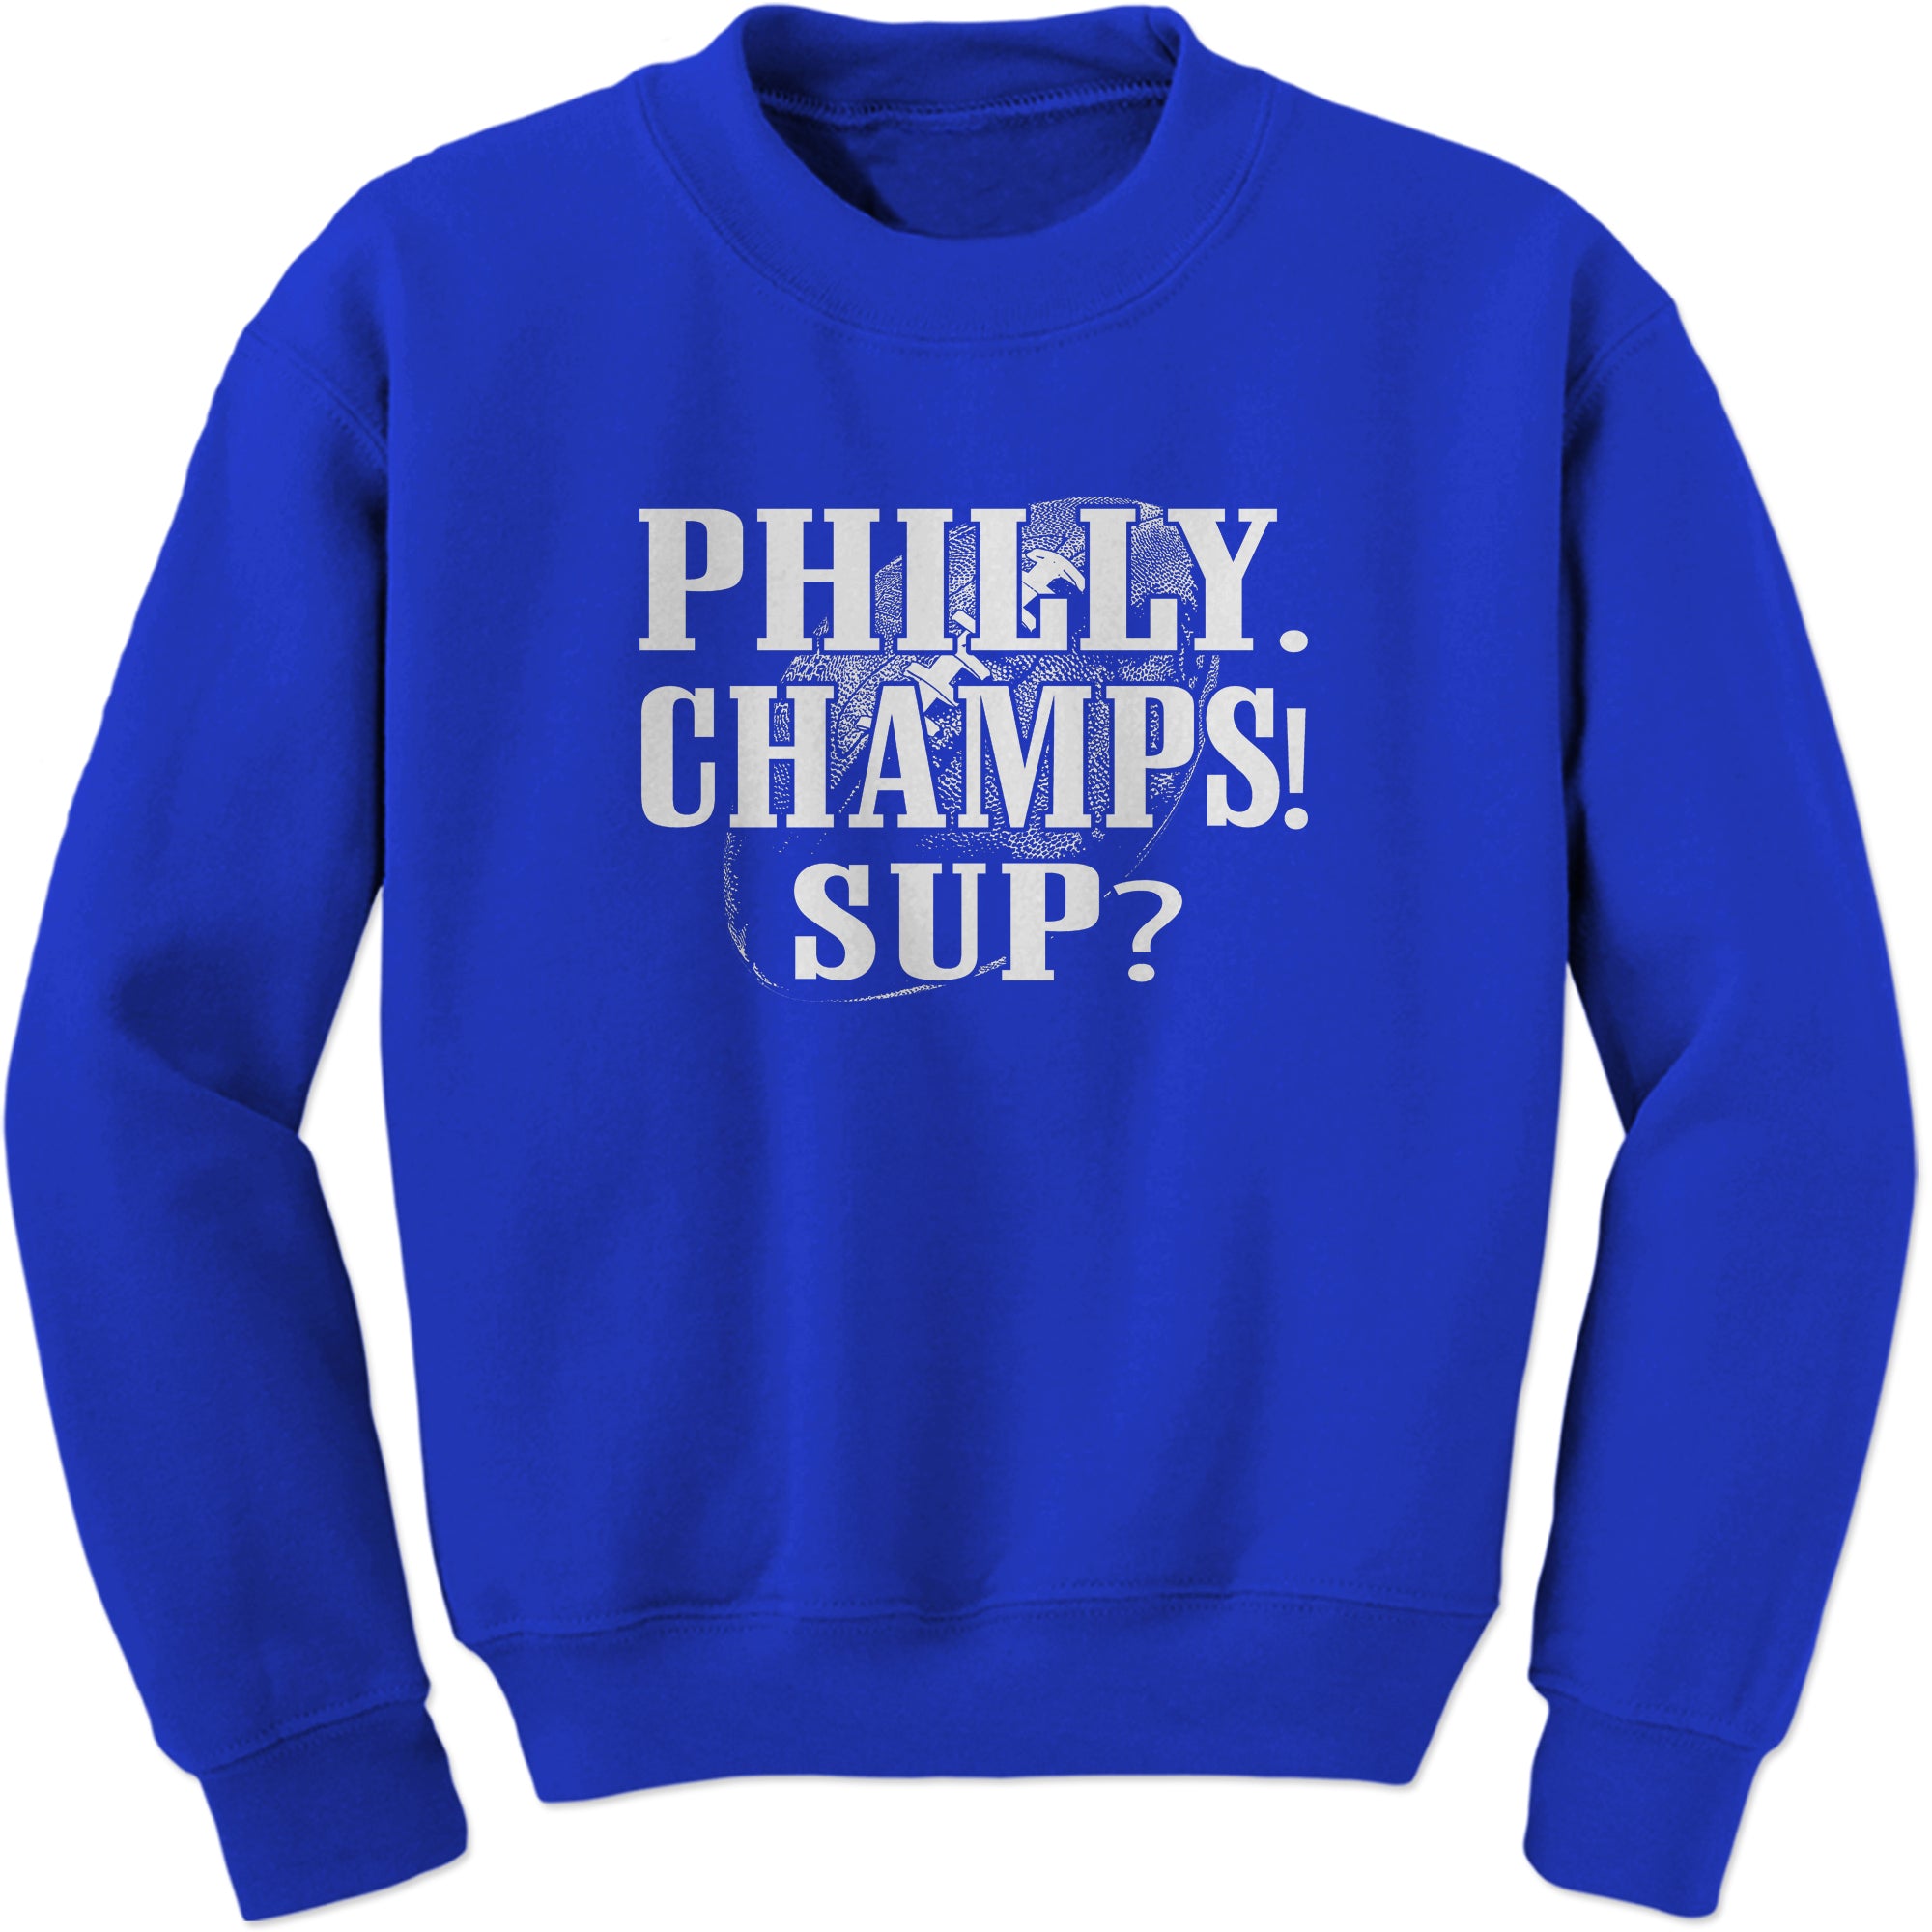 Philadelphia Football Champions 2017 Sweatshirt